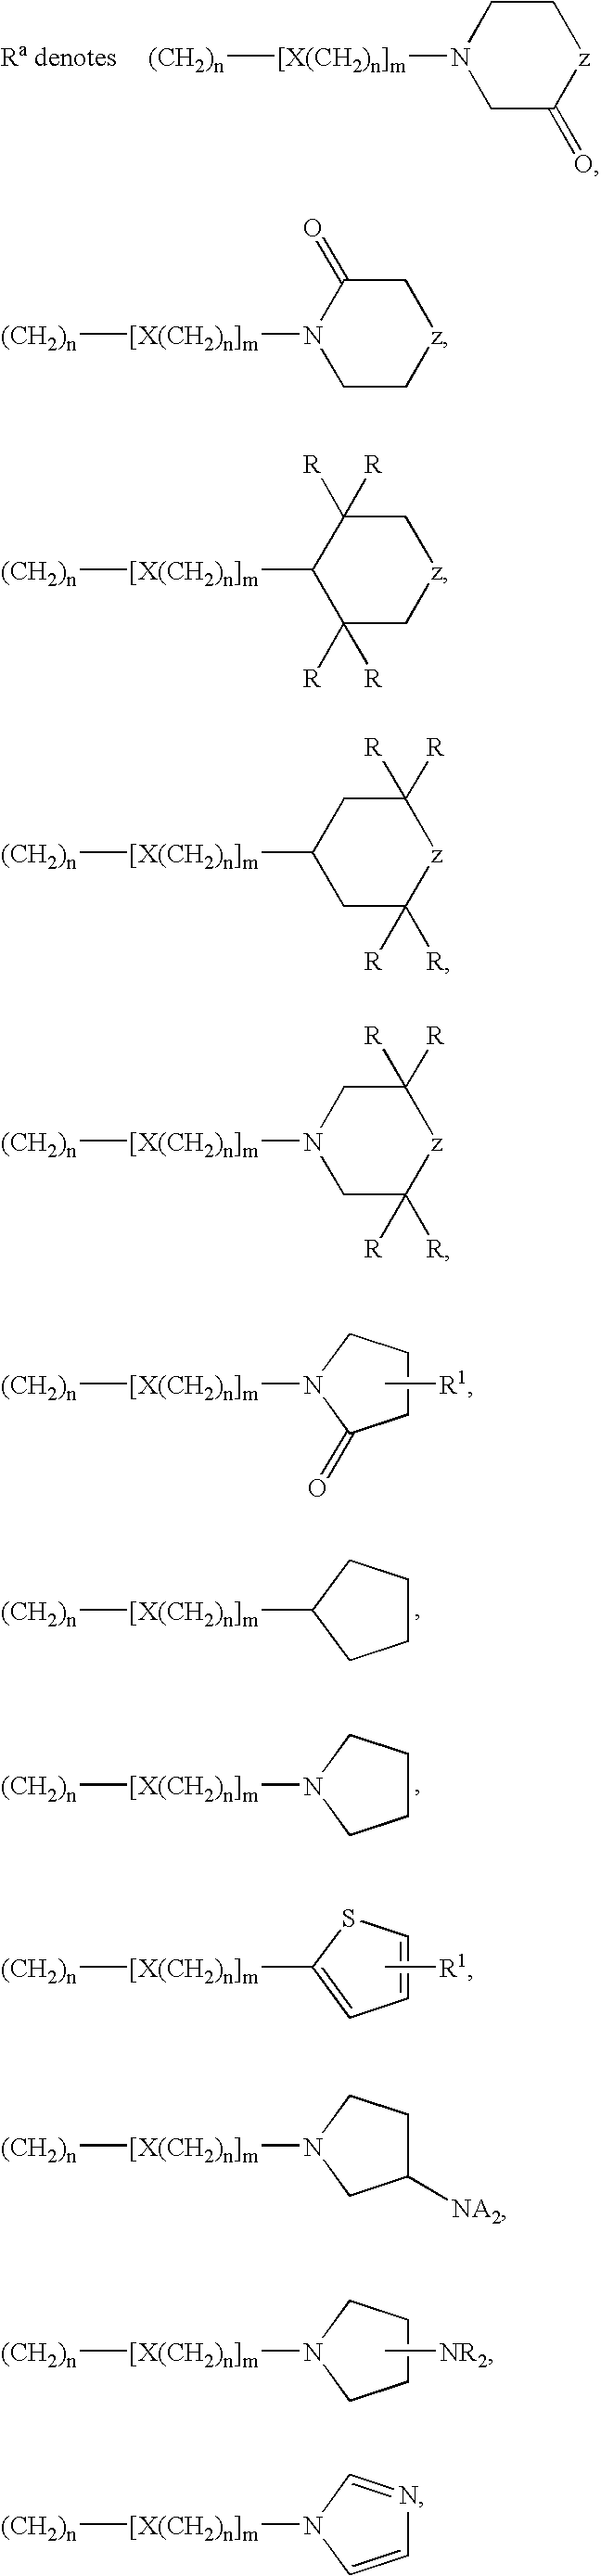 Tetrahydroquinoline Derivatives